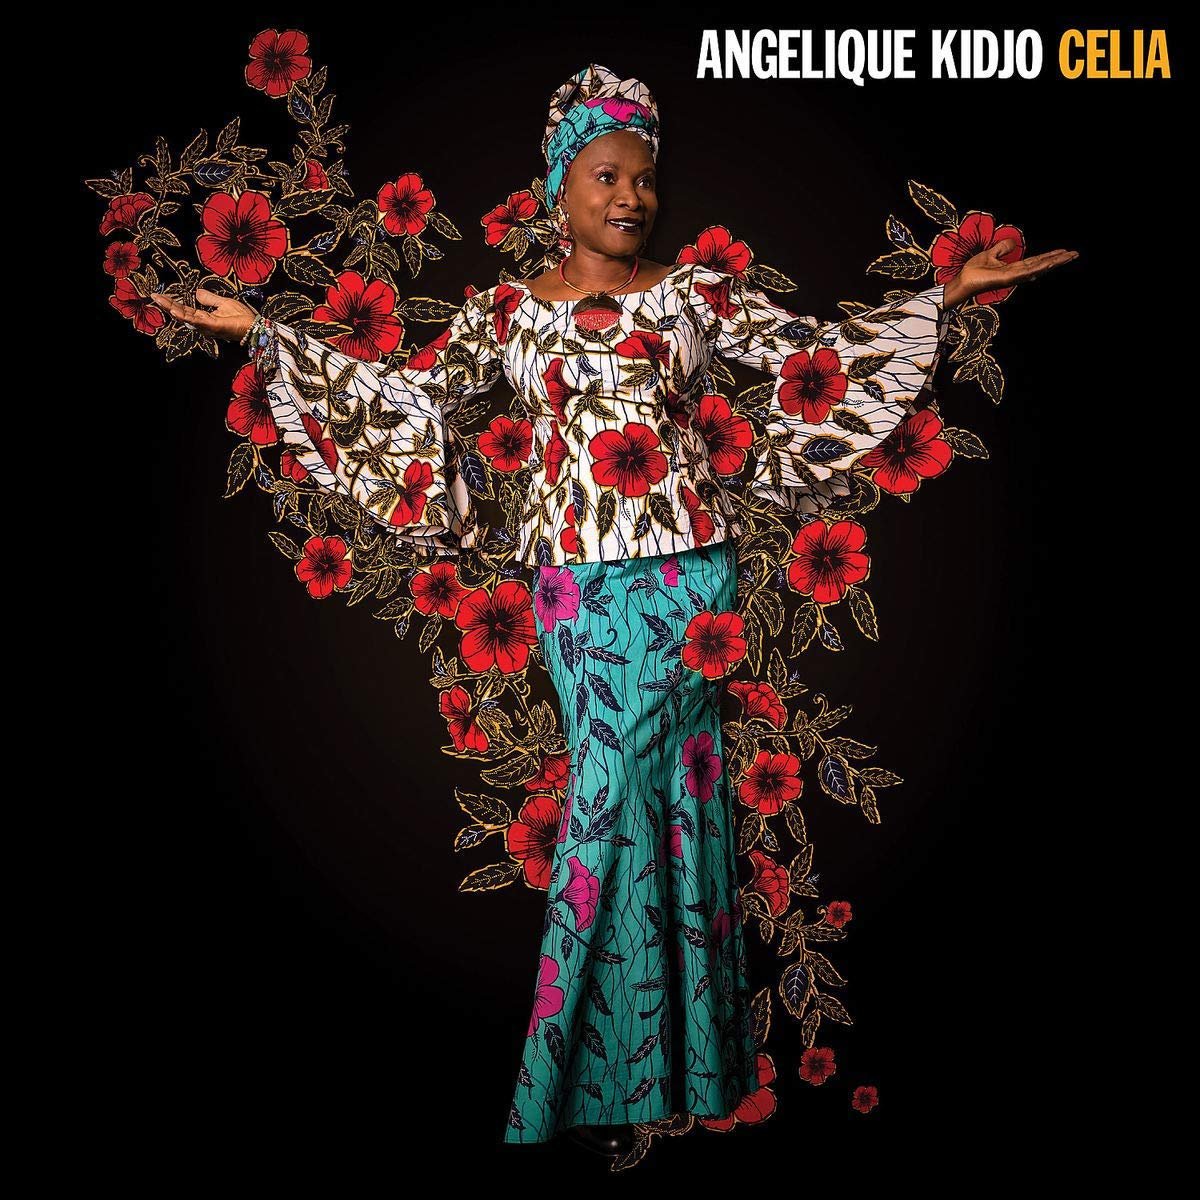 Esce "Celia", il nuovo album di ANGÉLIQUE KIDJO  dedicato alla grande Celia Cruz